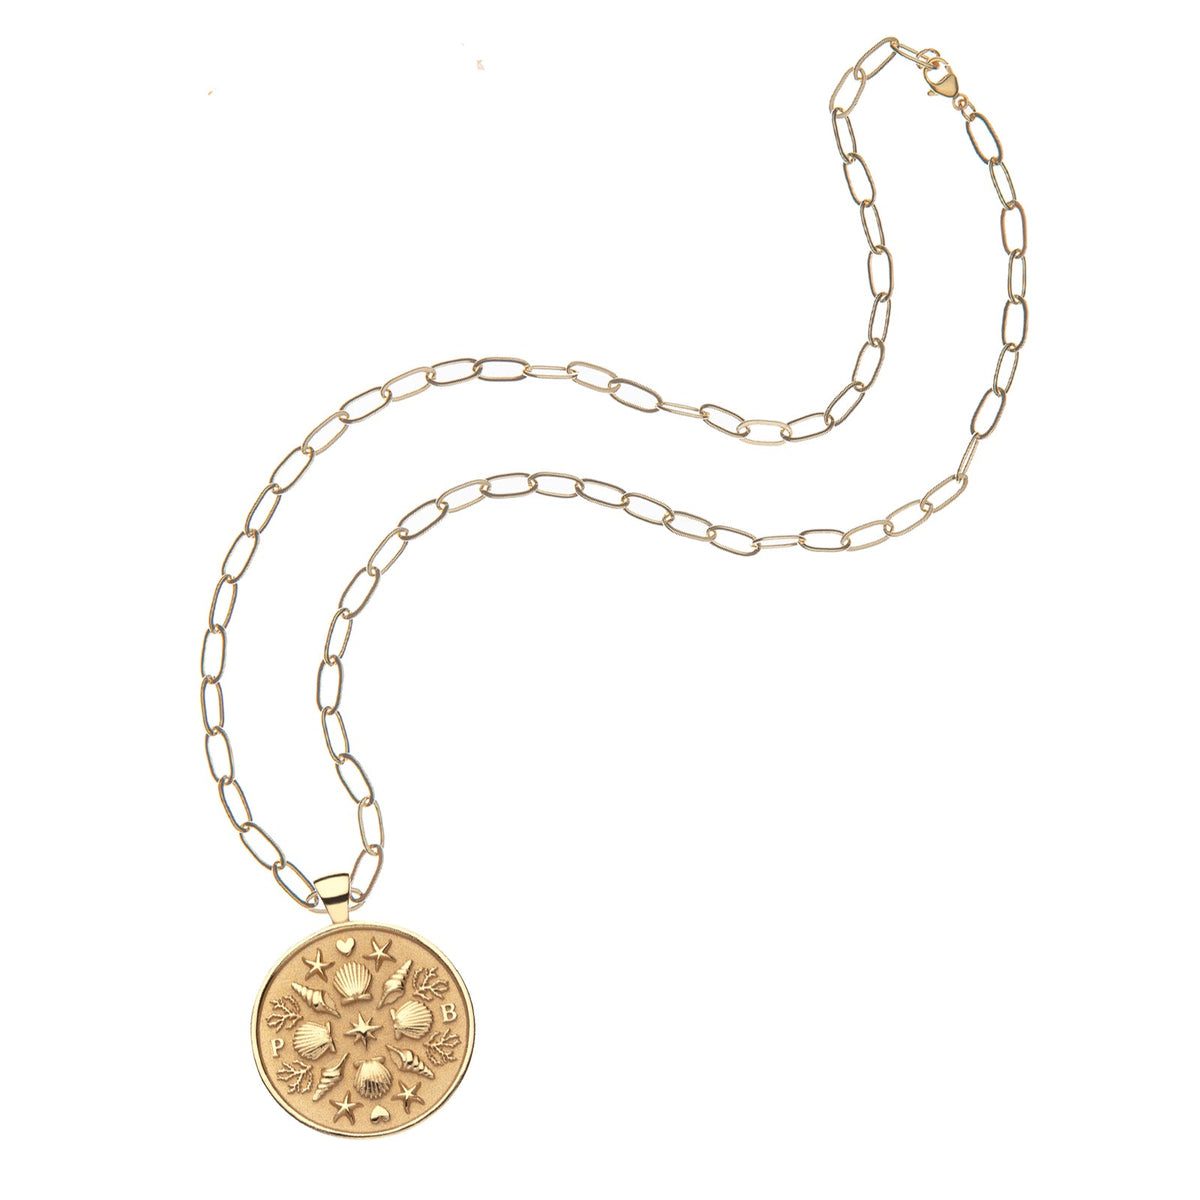 Palm Beach JW Original Pendant Coin Necklace